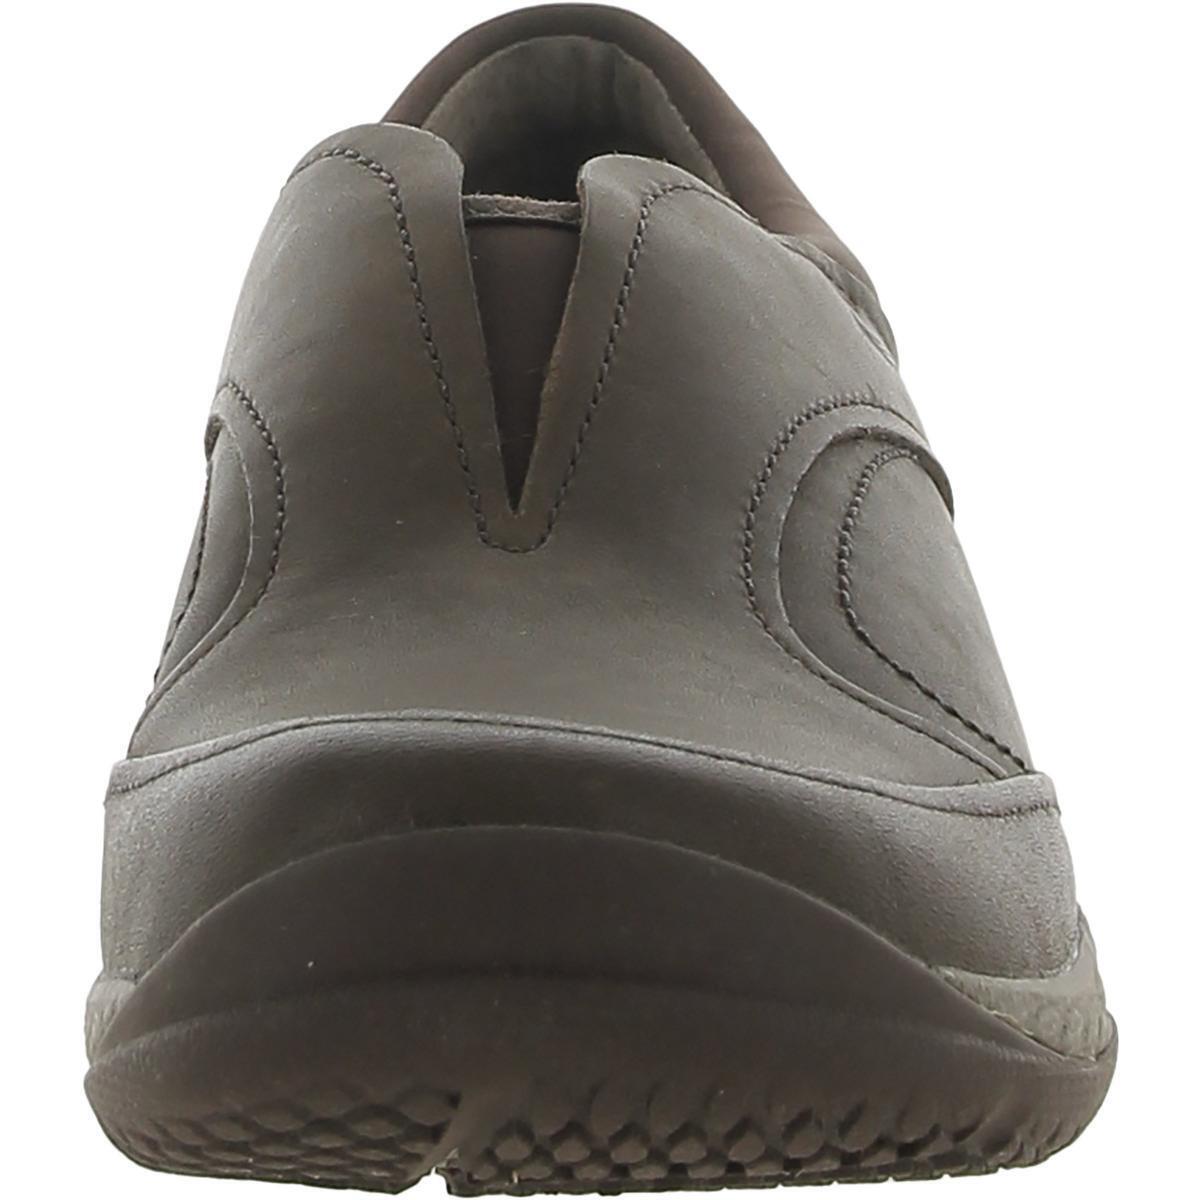 Merrell Womens Encore Q2 Brown Leather Loafers Shoes 5.5 Medium B M Bhfo 1823